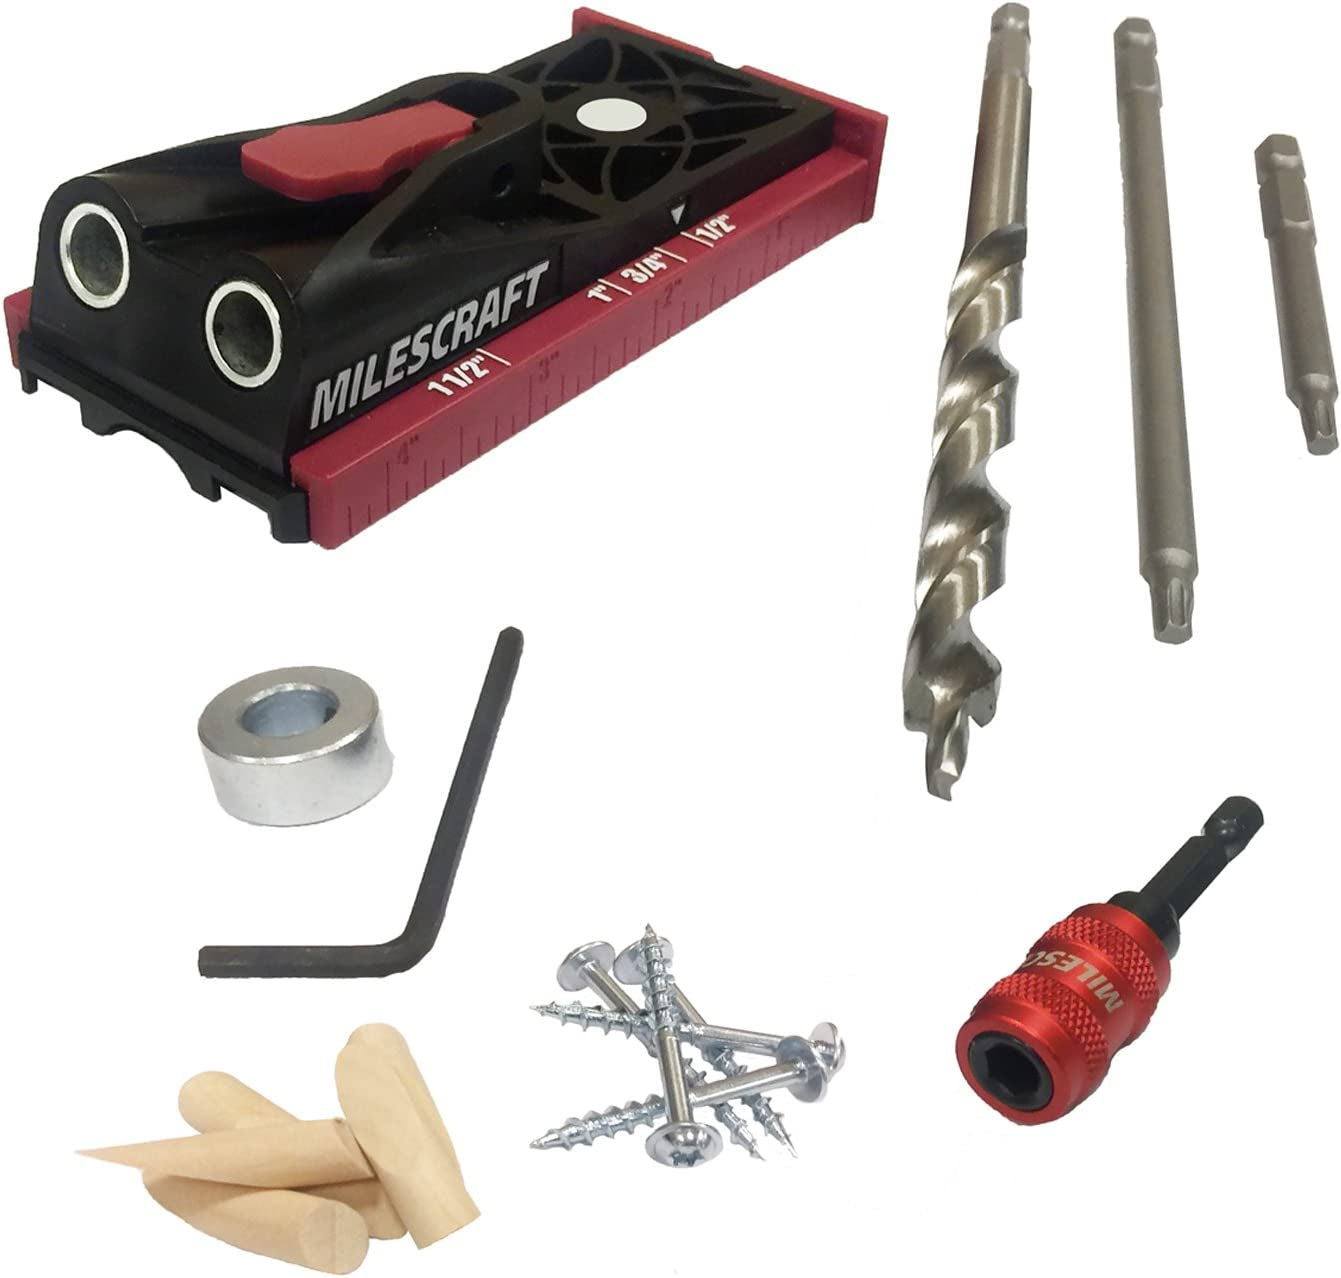 Milescraft, Milescraft 1323 Pocketjig200 Kit - Complete Pocket Hole Kit with Jig, Bit, Screws and Drivers,Black/Red